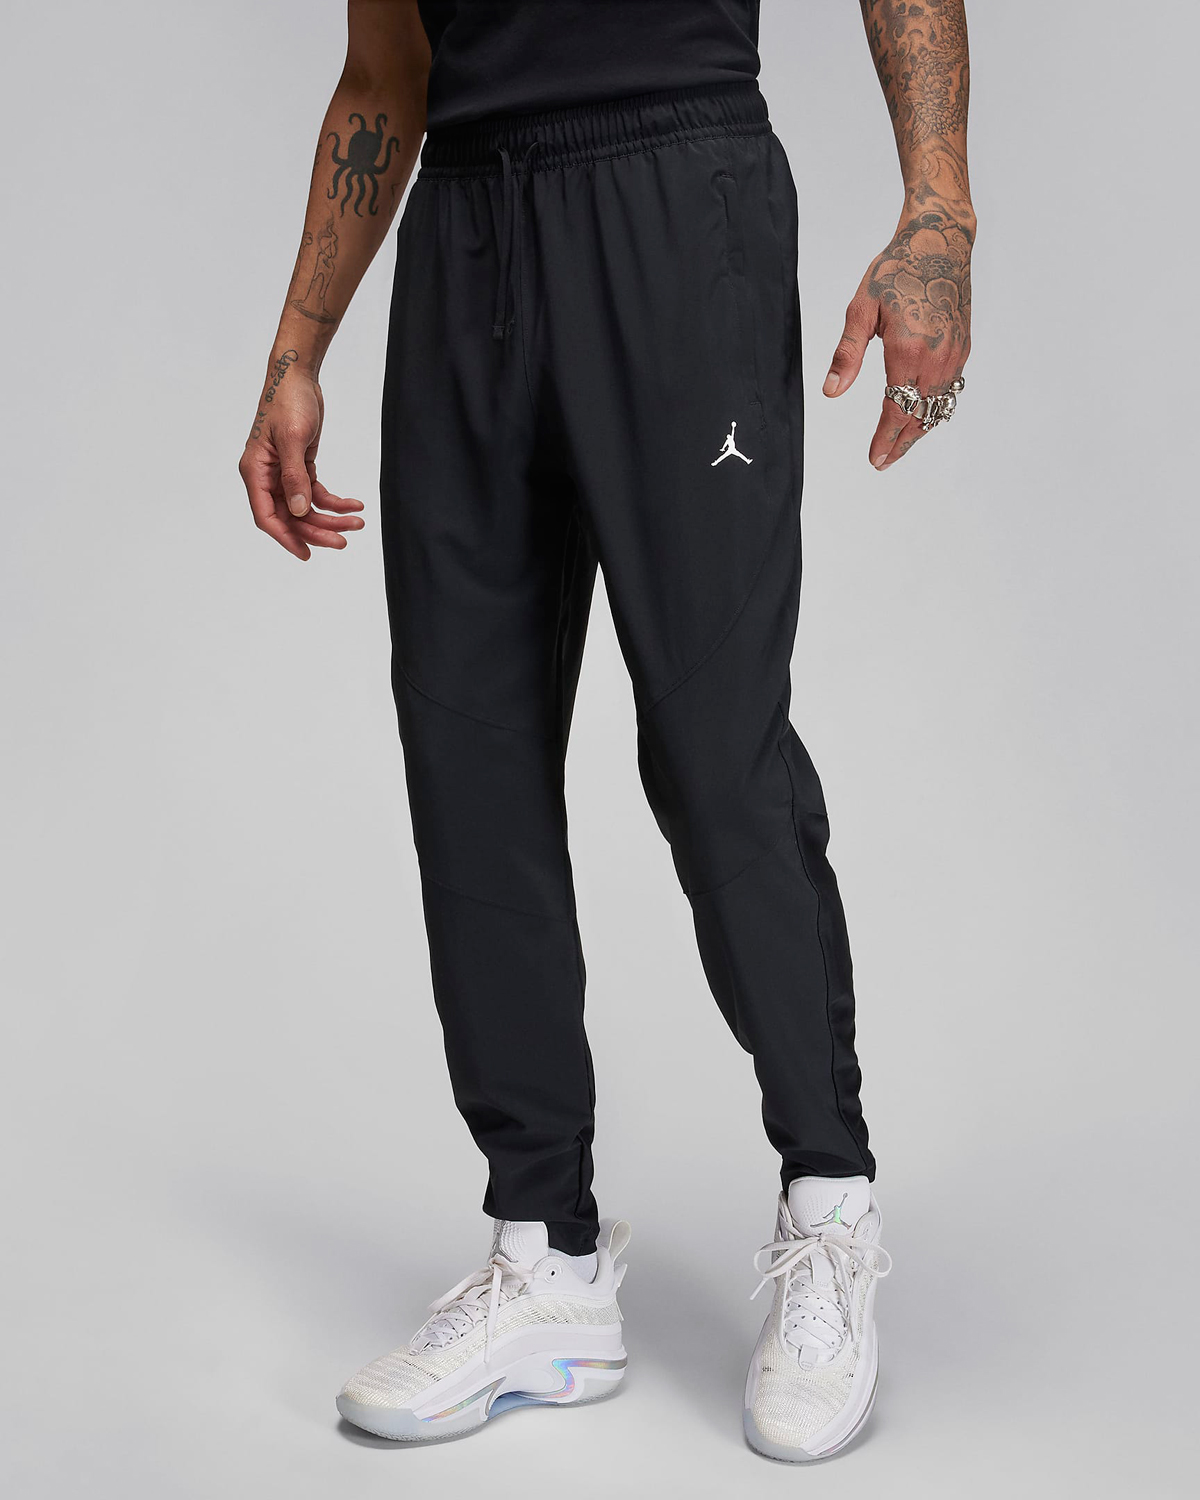 Jordan-Dri-Fit-Sport-Woven-Pants-Black-White-1